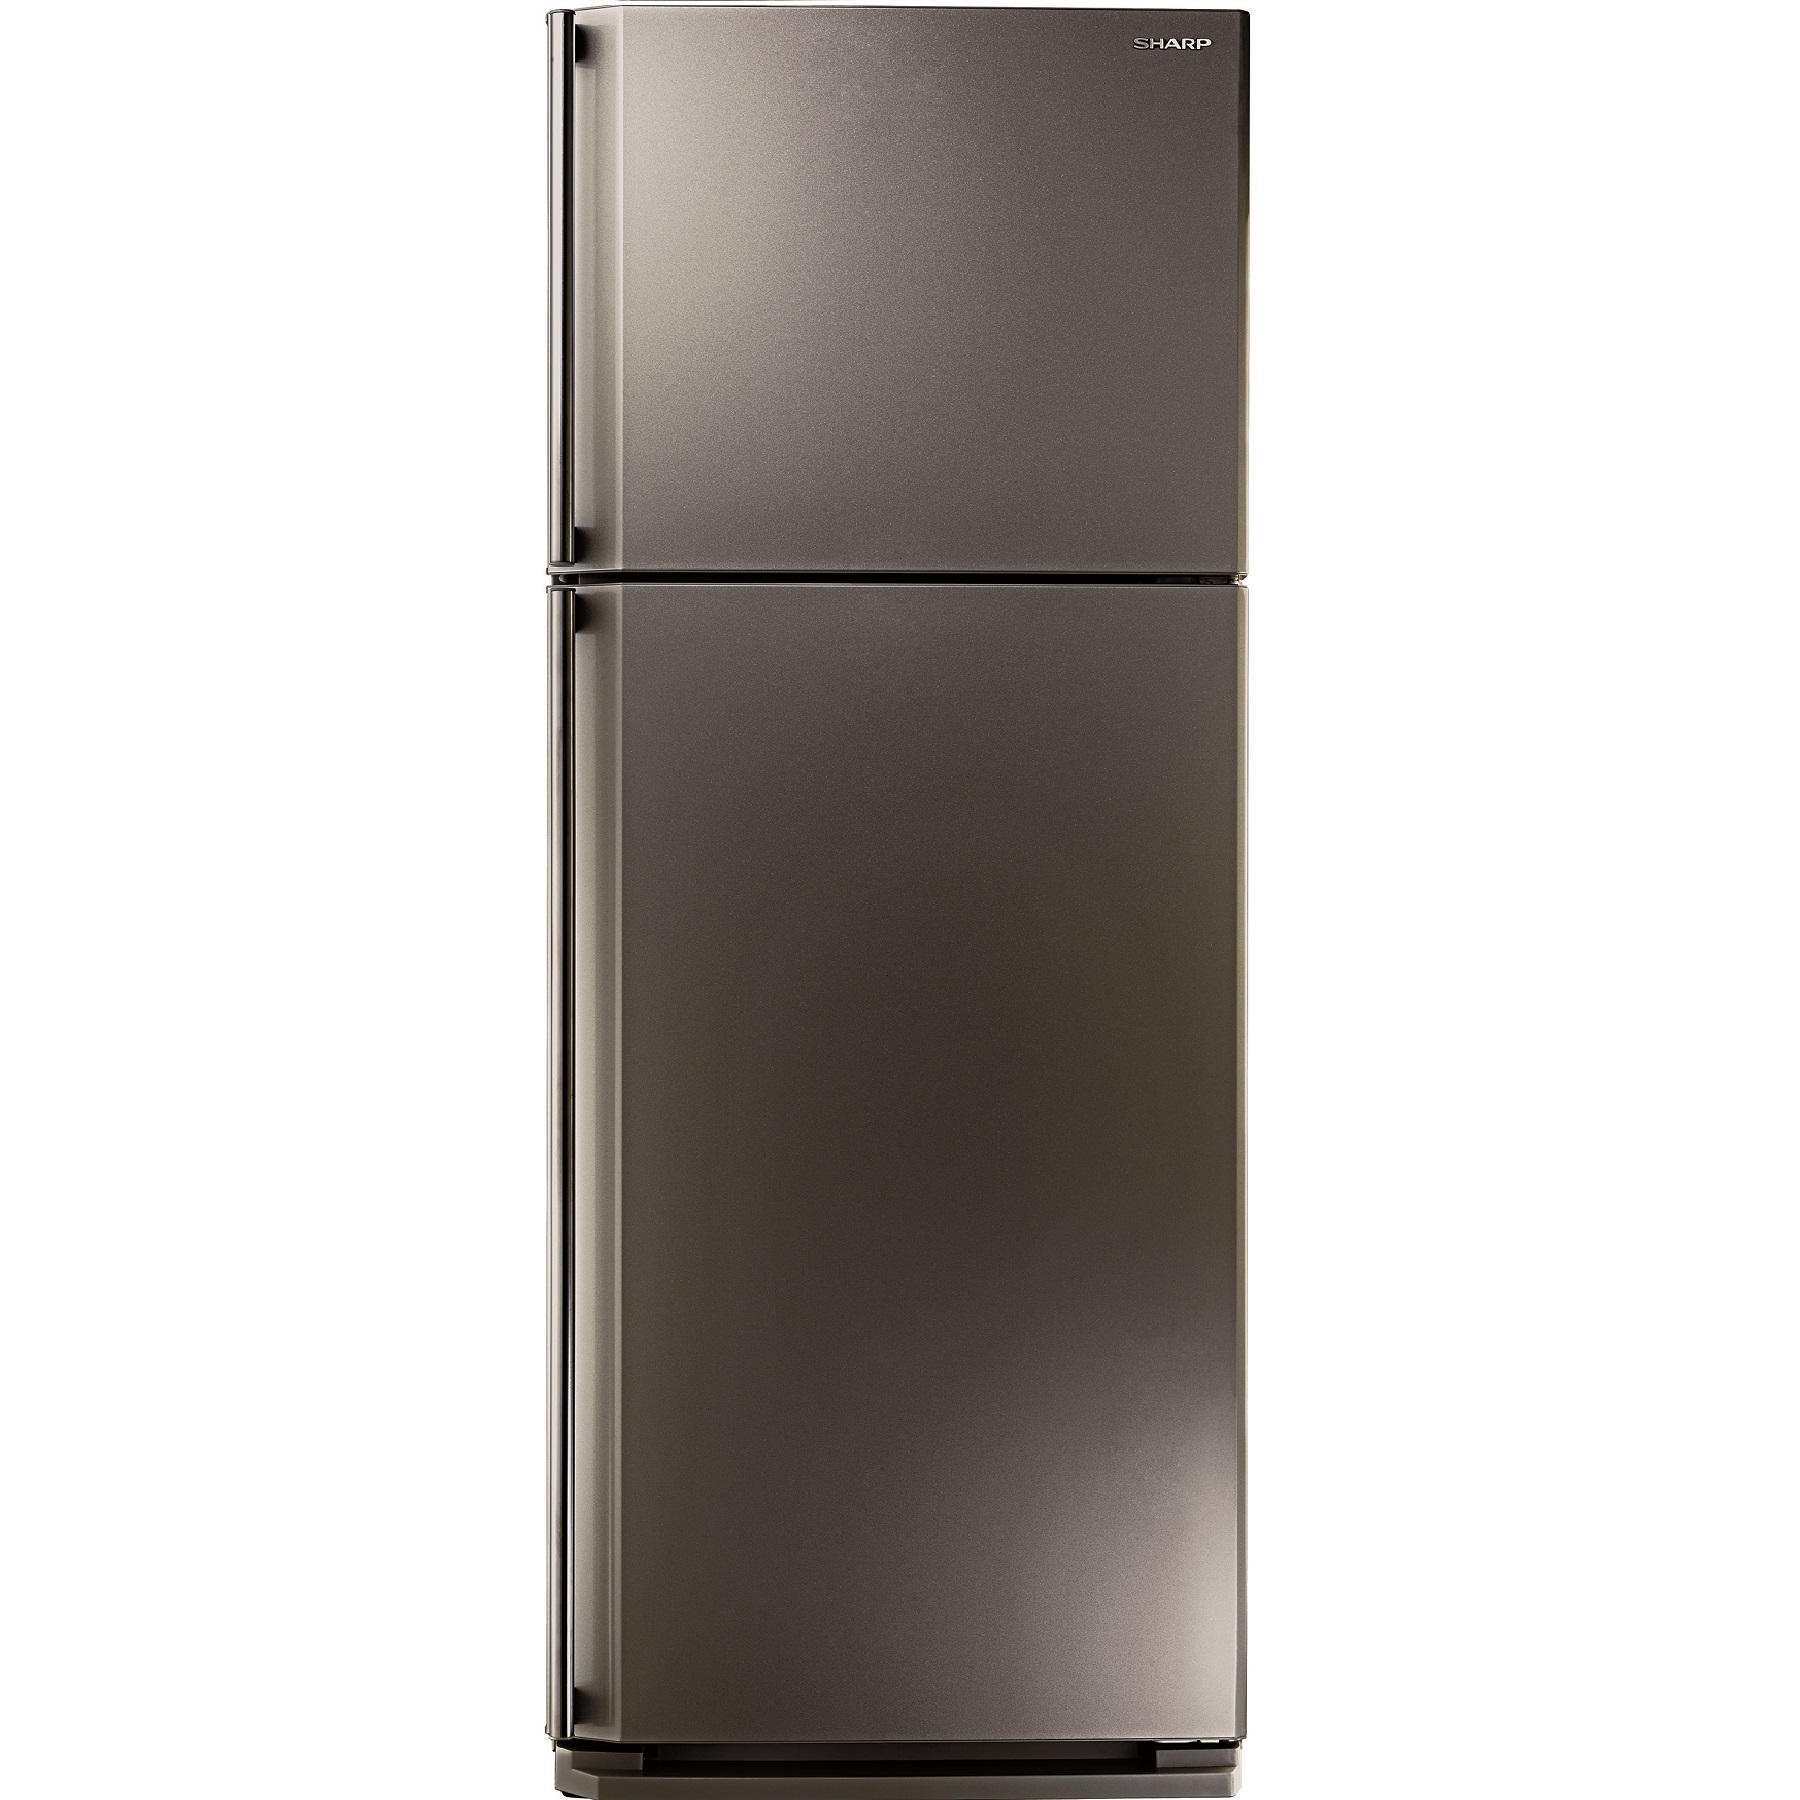 Холодильник, 2х дверный, верхняя морозилка, серебристый, класс A, SJ-58C-ST